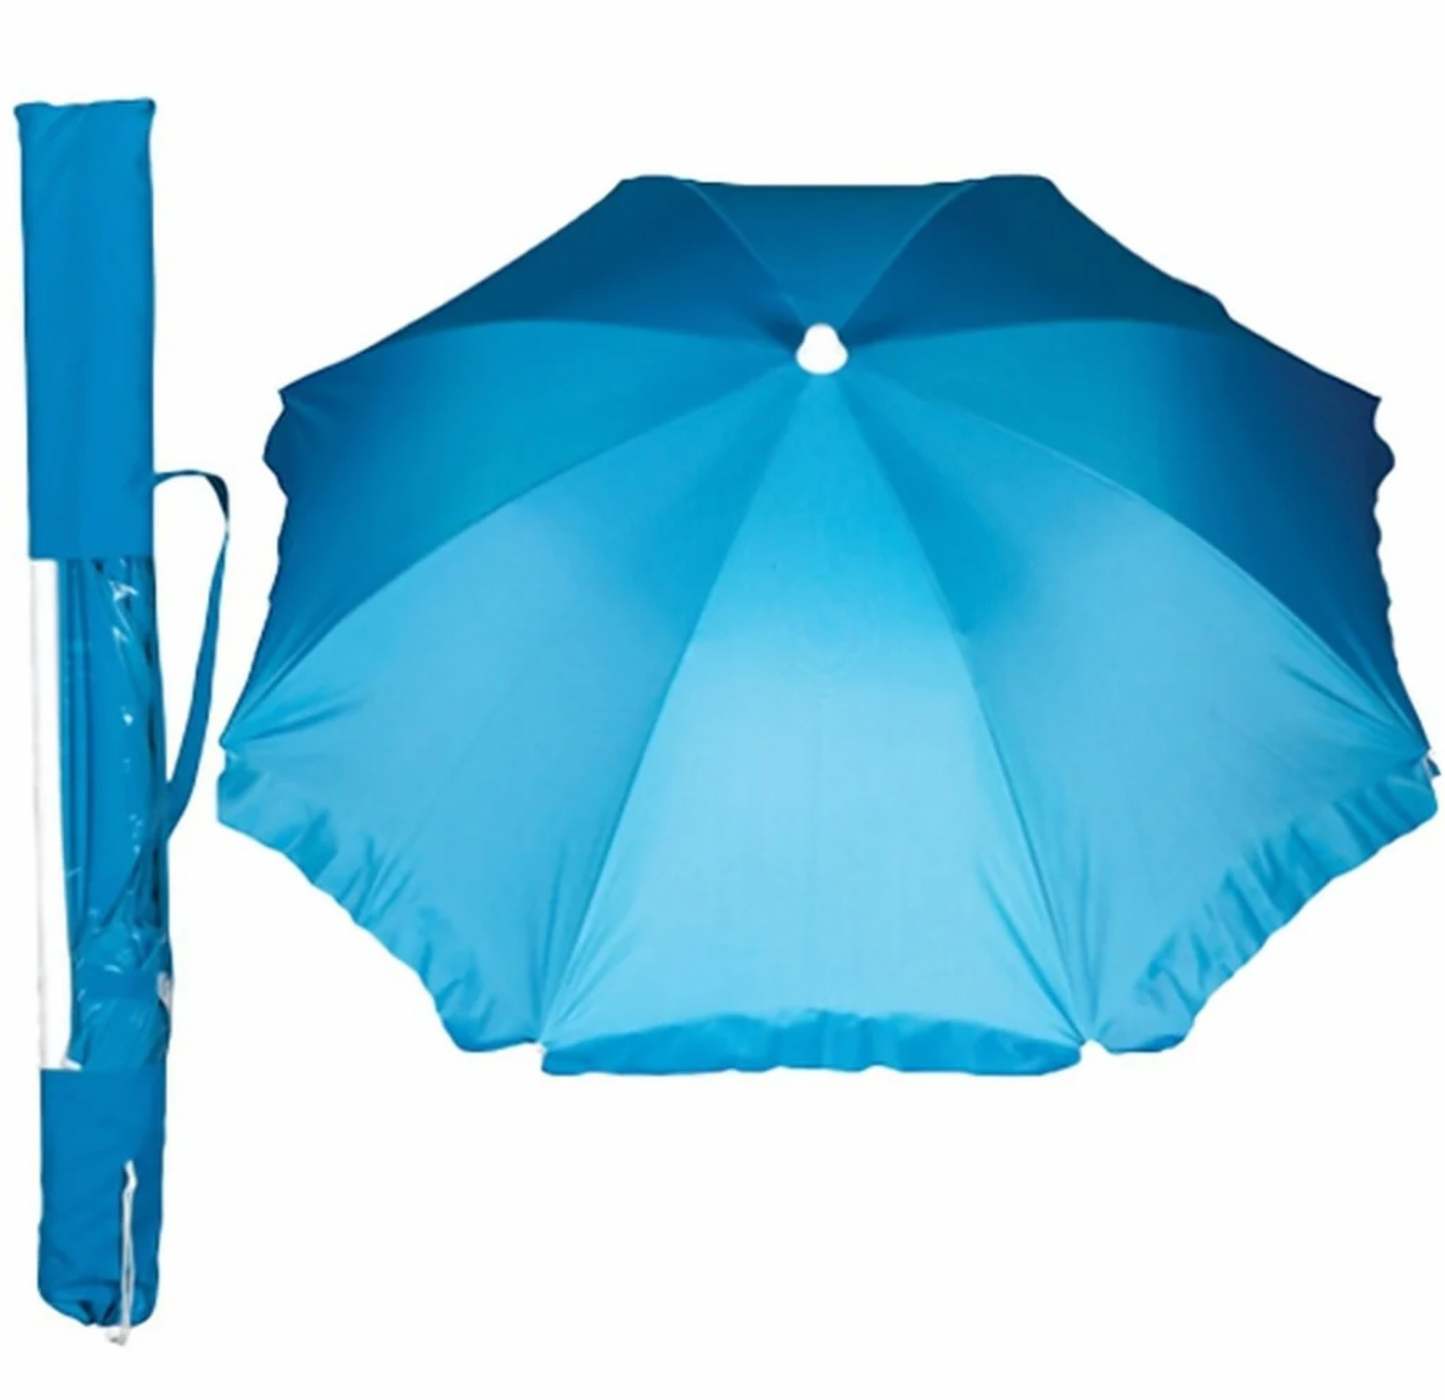 Island Shade Umbrella